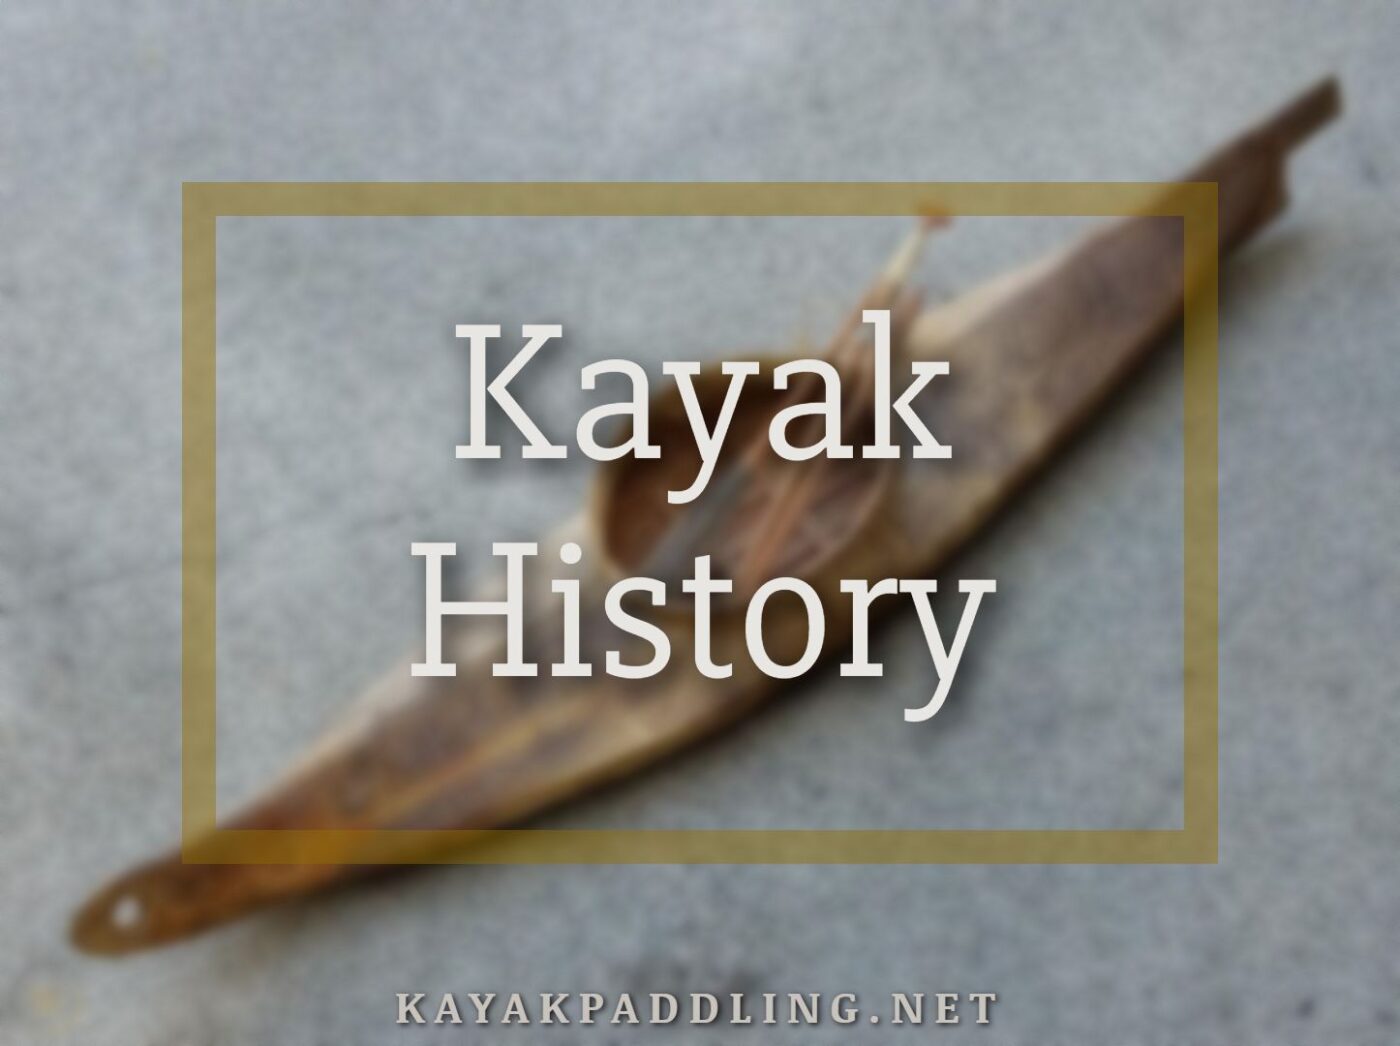 Kayak History